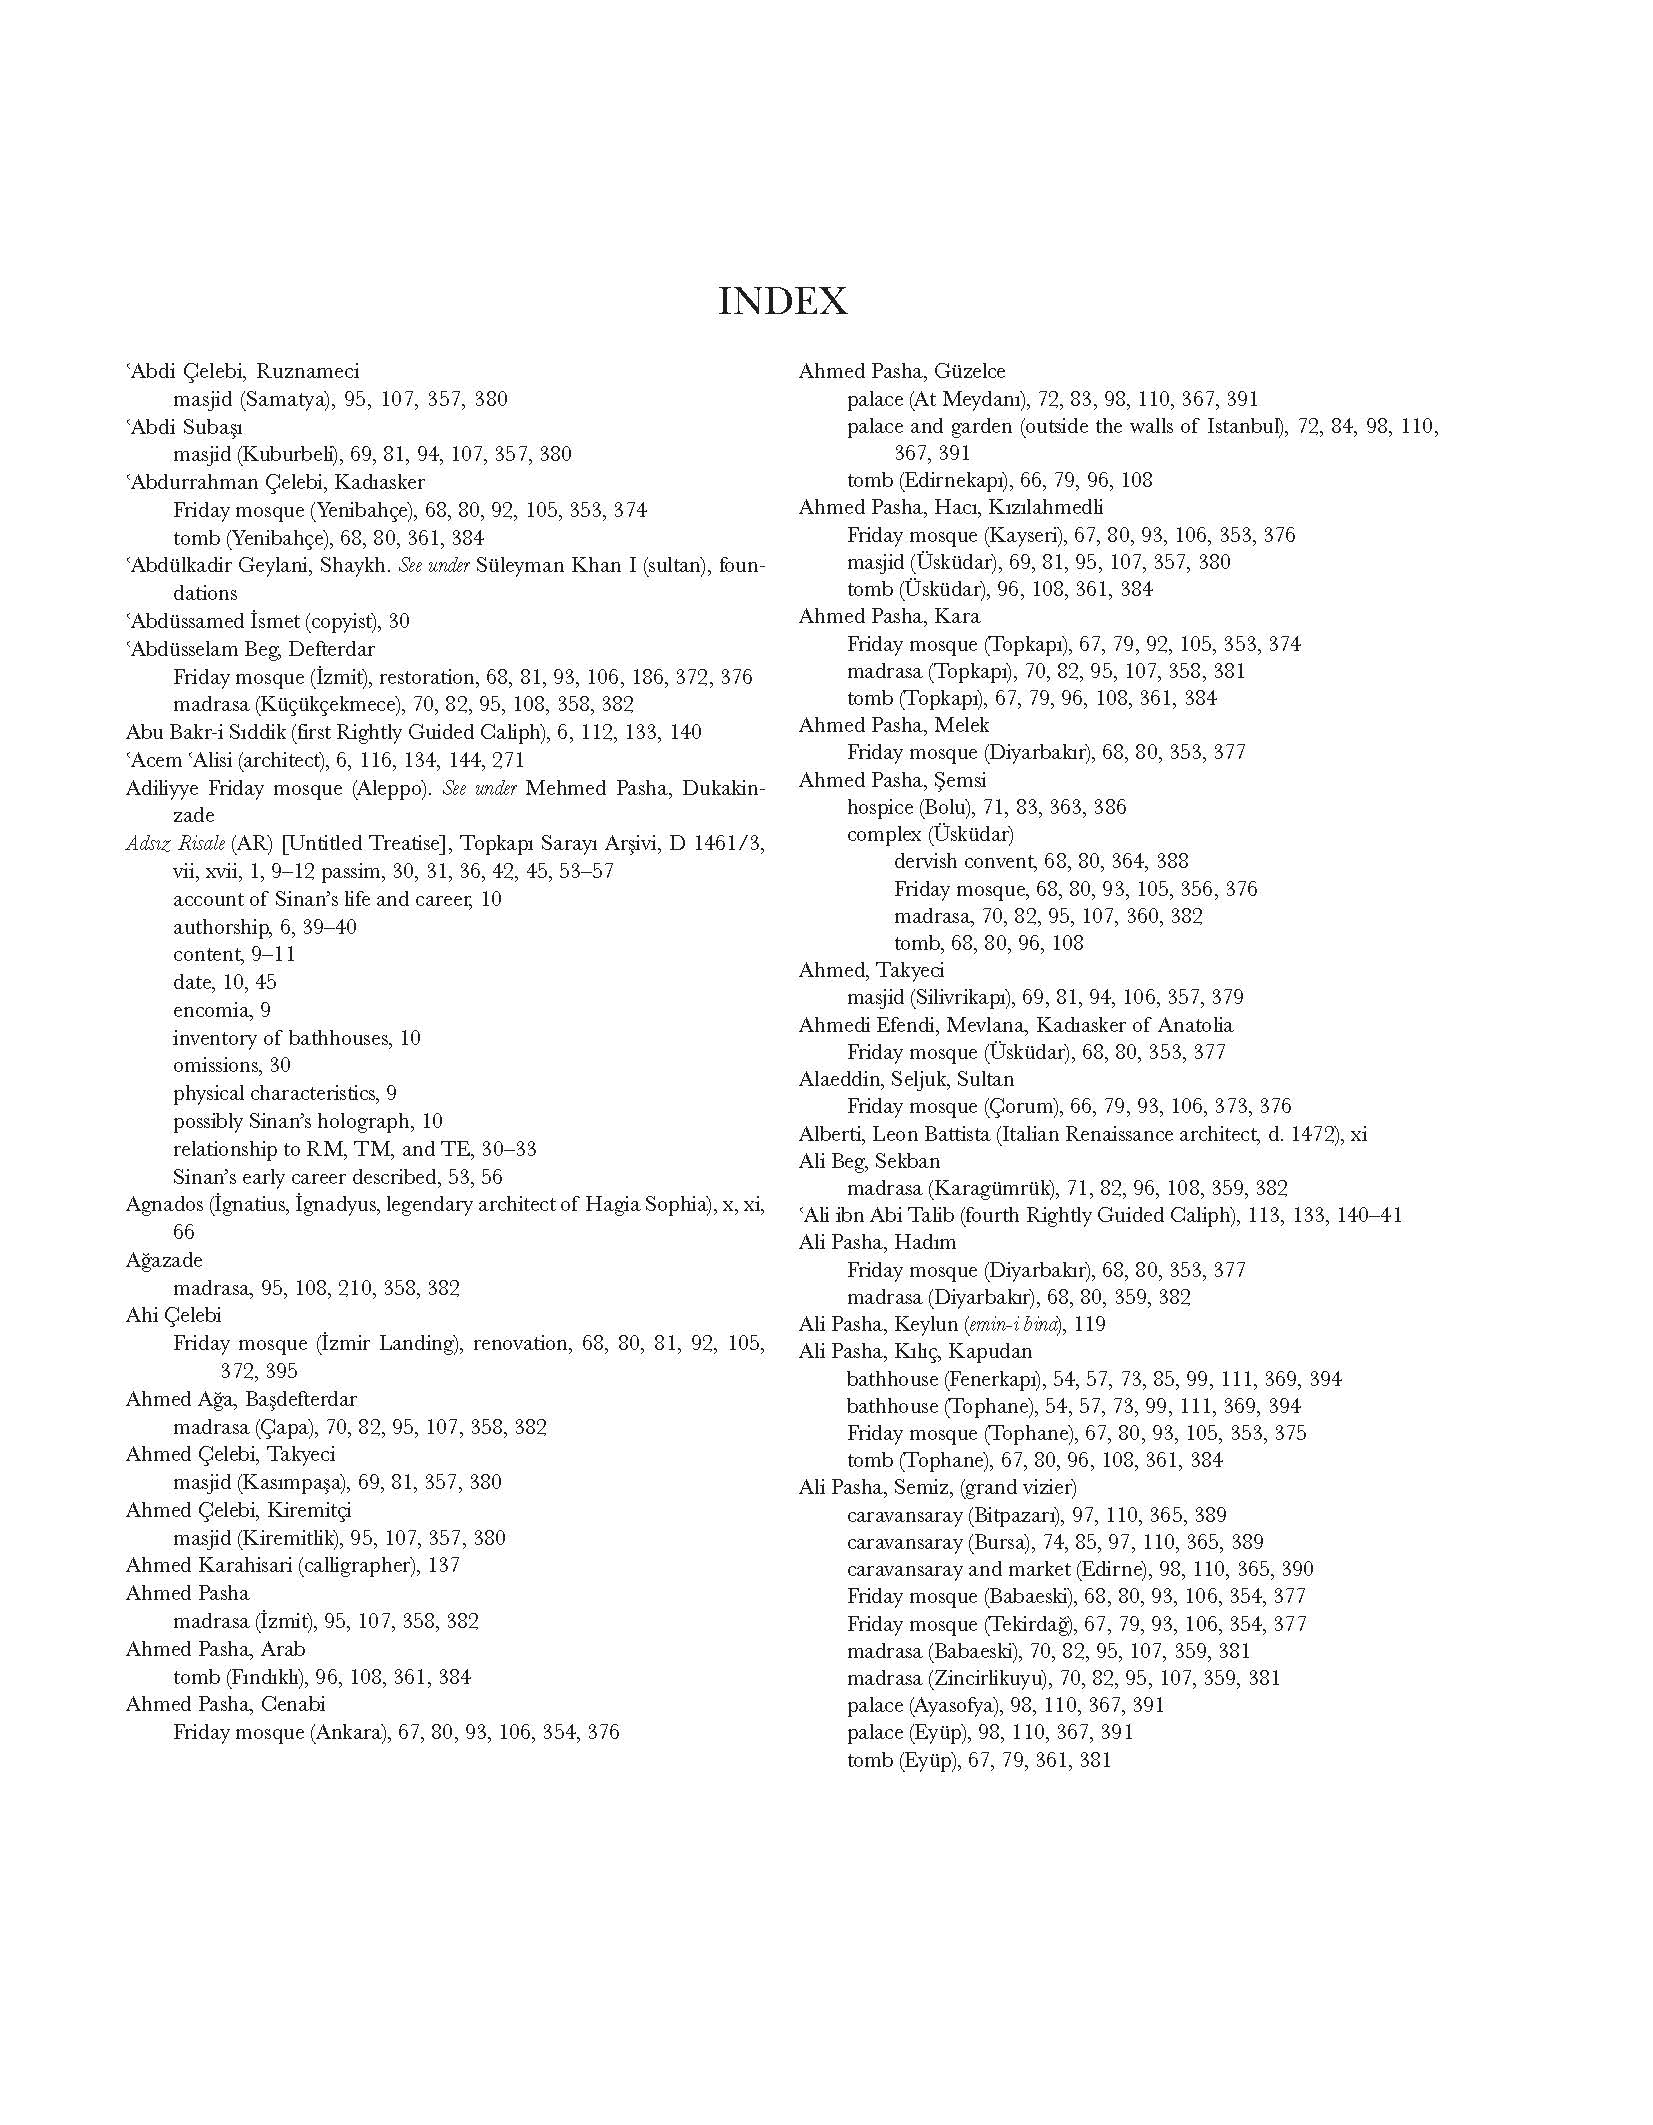 Sinan's Autobiographies: Five Sixteenth-Century Texts. Index.